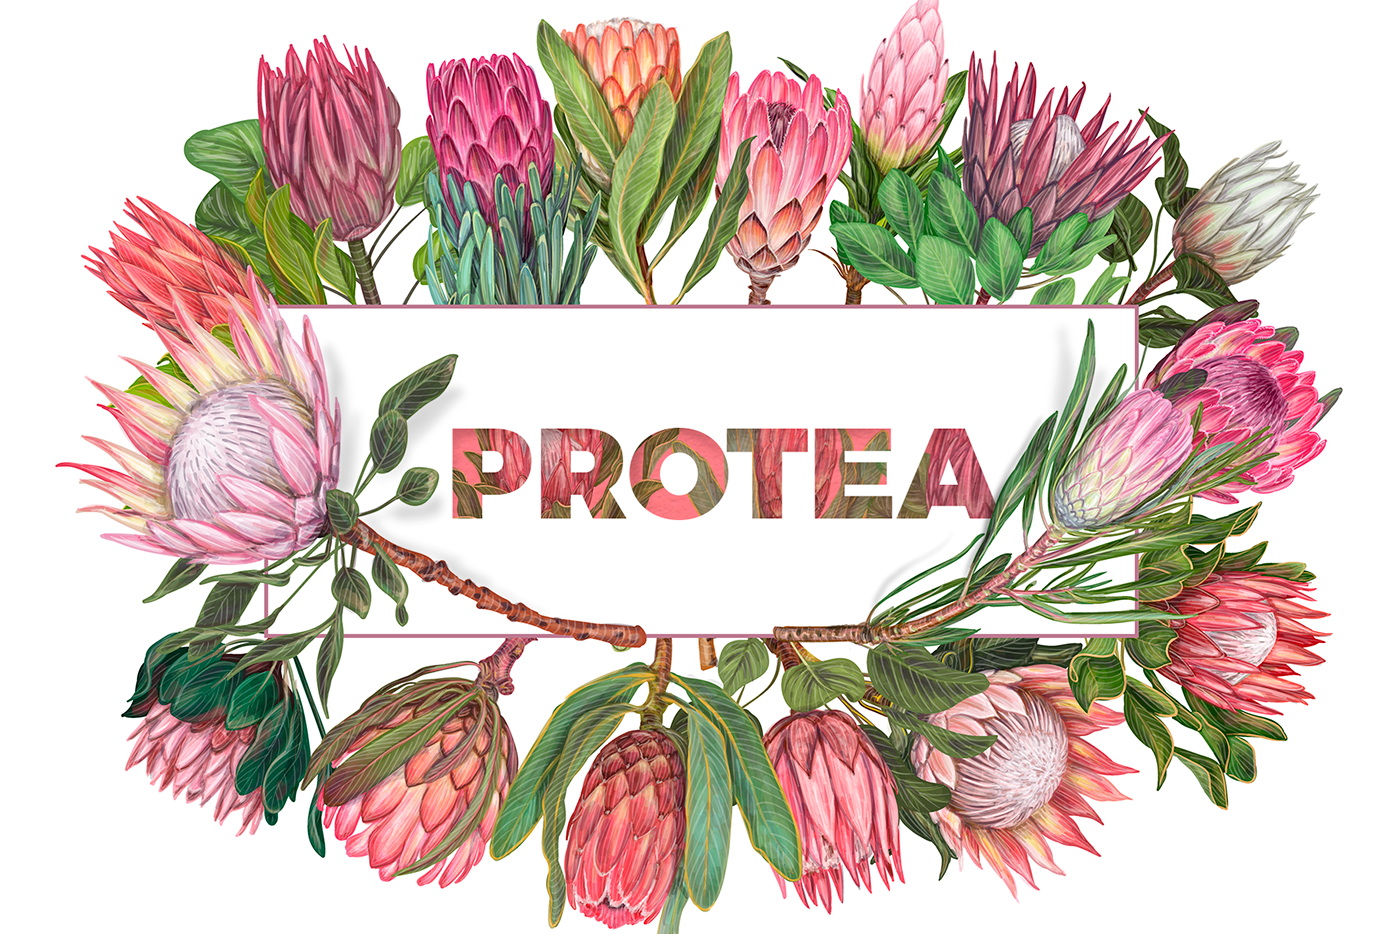 Beautiful protea flower vector detailed illustrations. By Ukranian artist Natalka Dmitrova.
